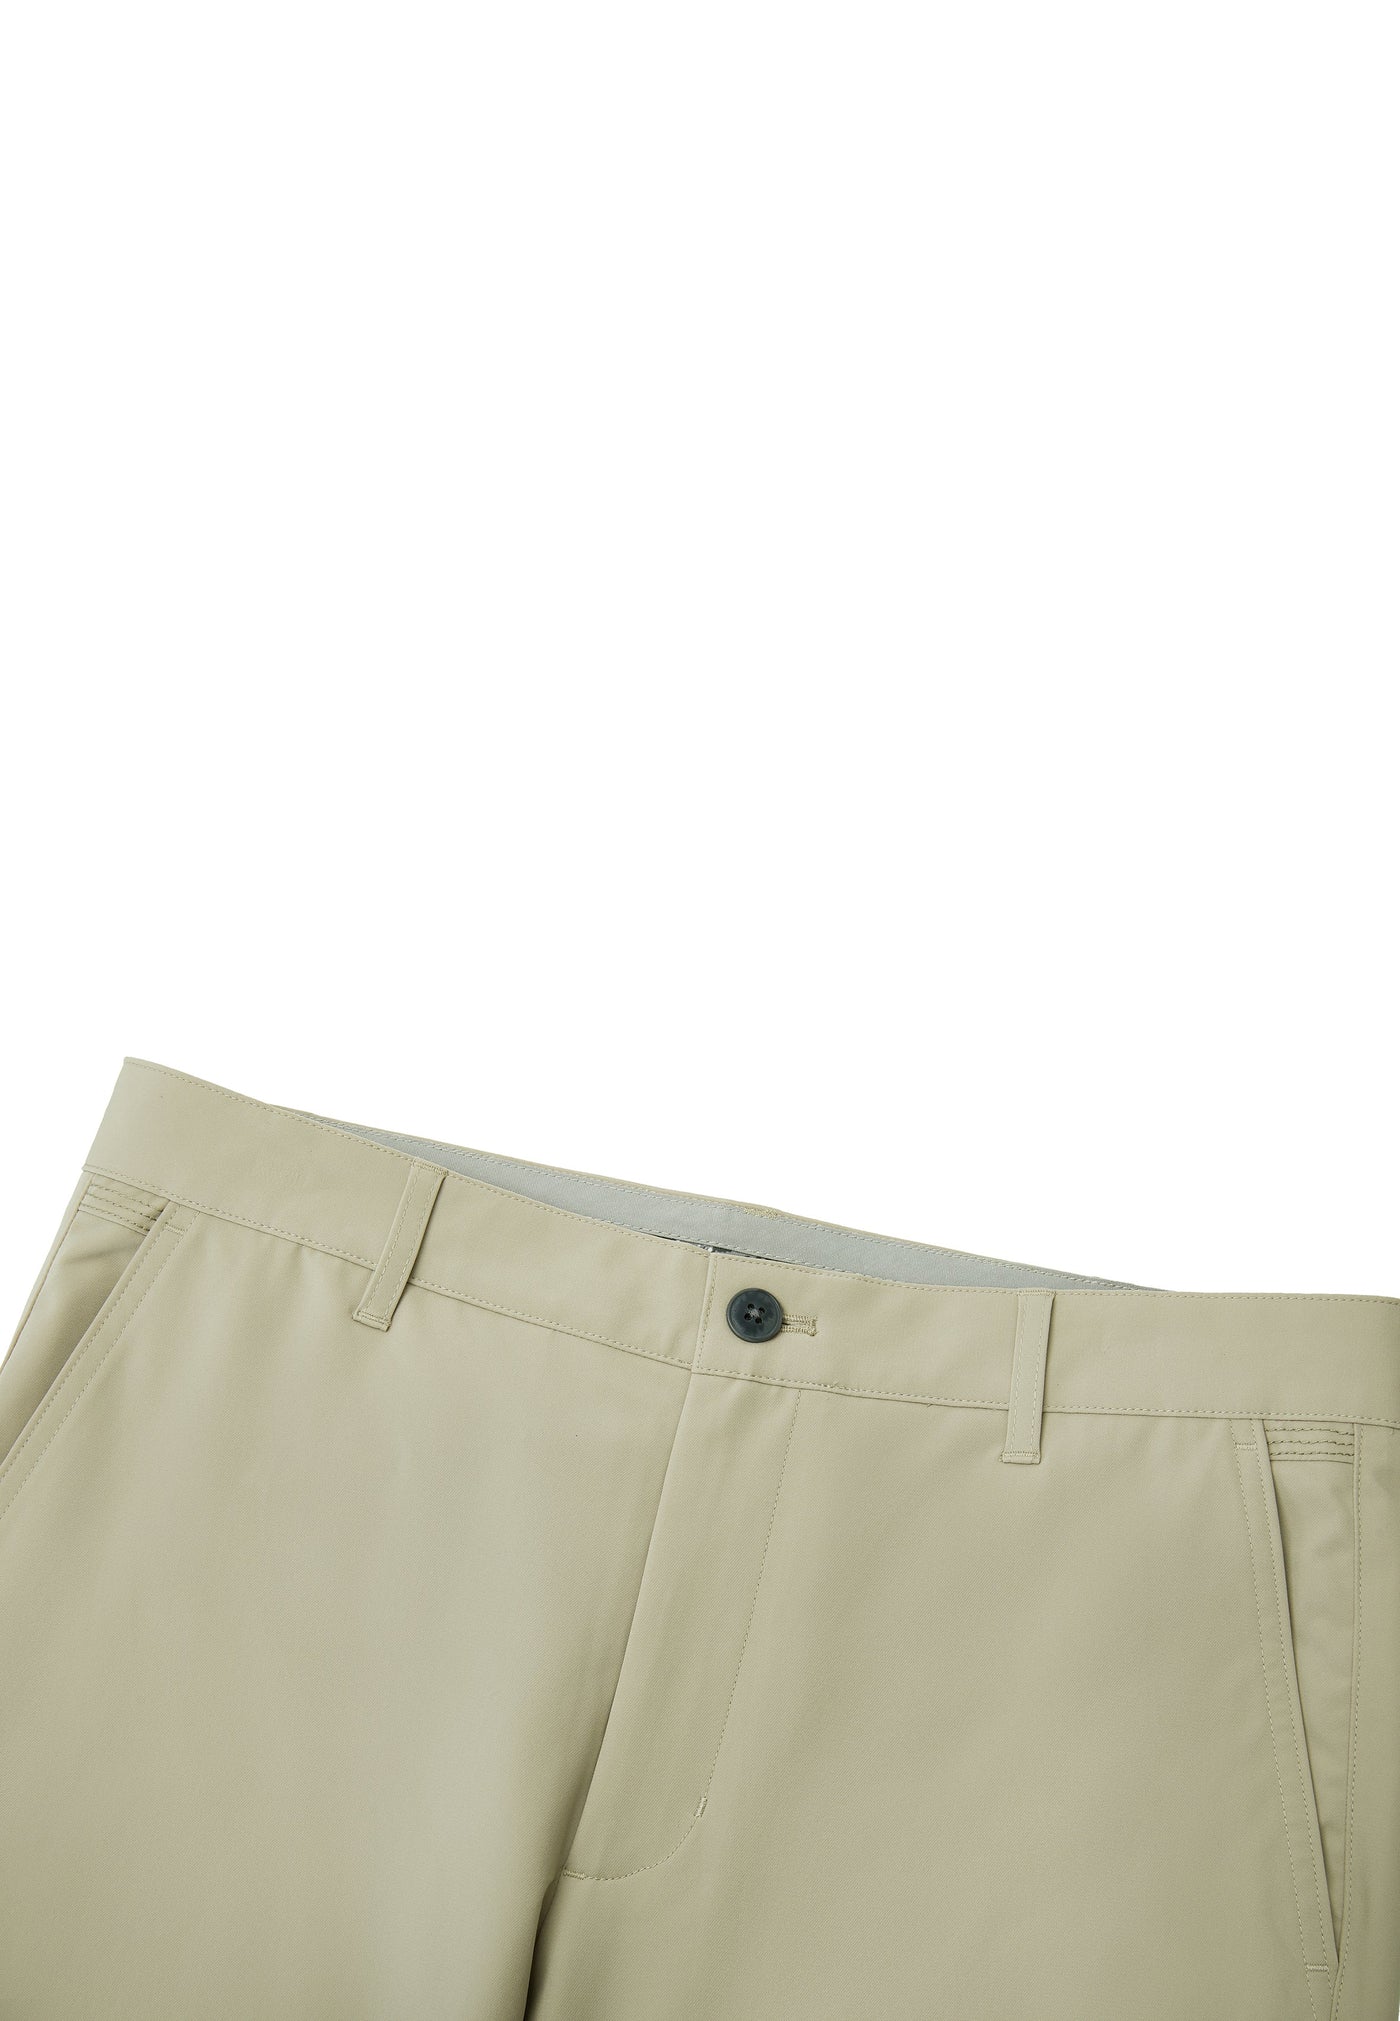 Men Clothing Multi-Way Strech Informal Pants Slim Tapered Fit